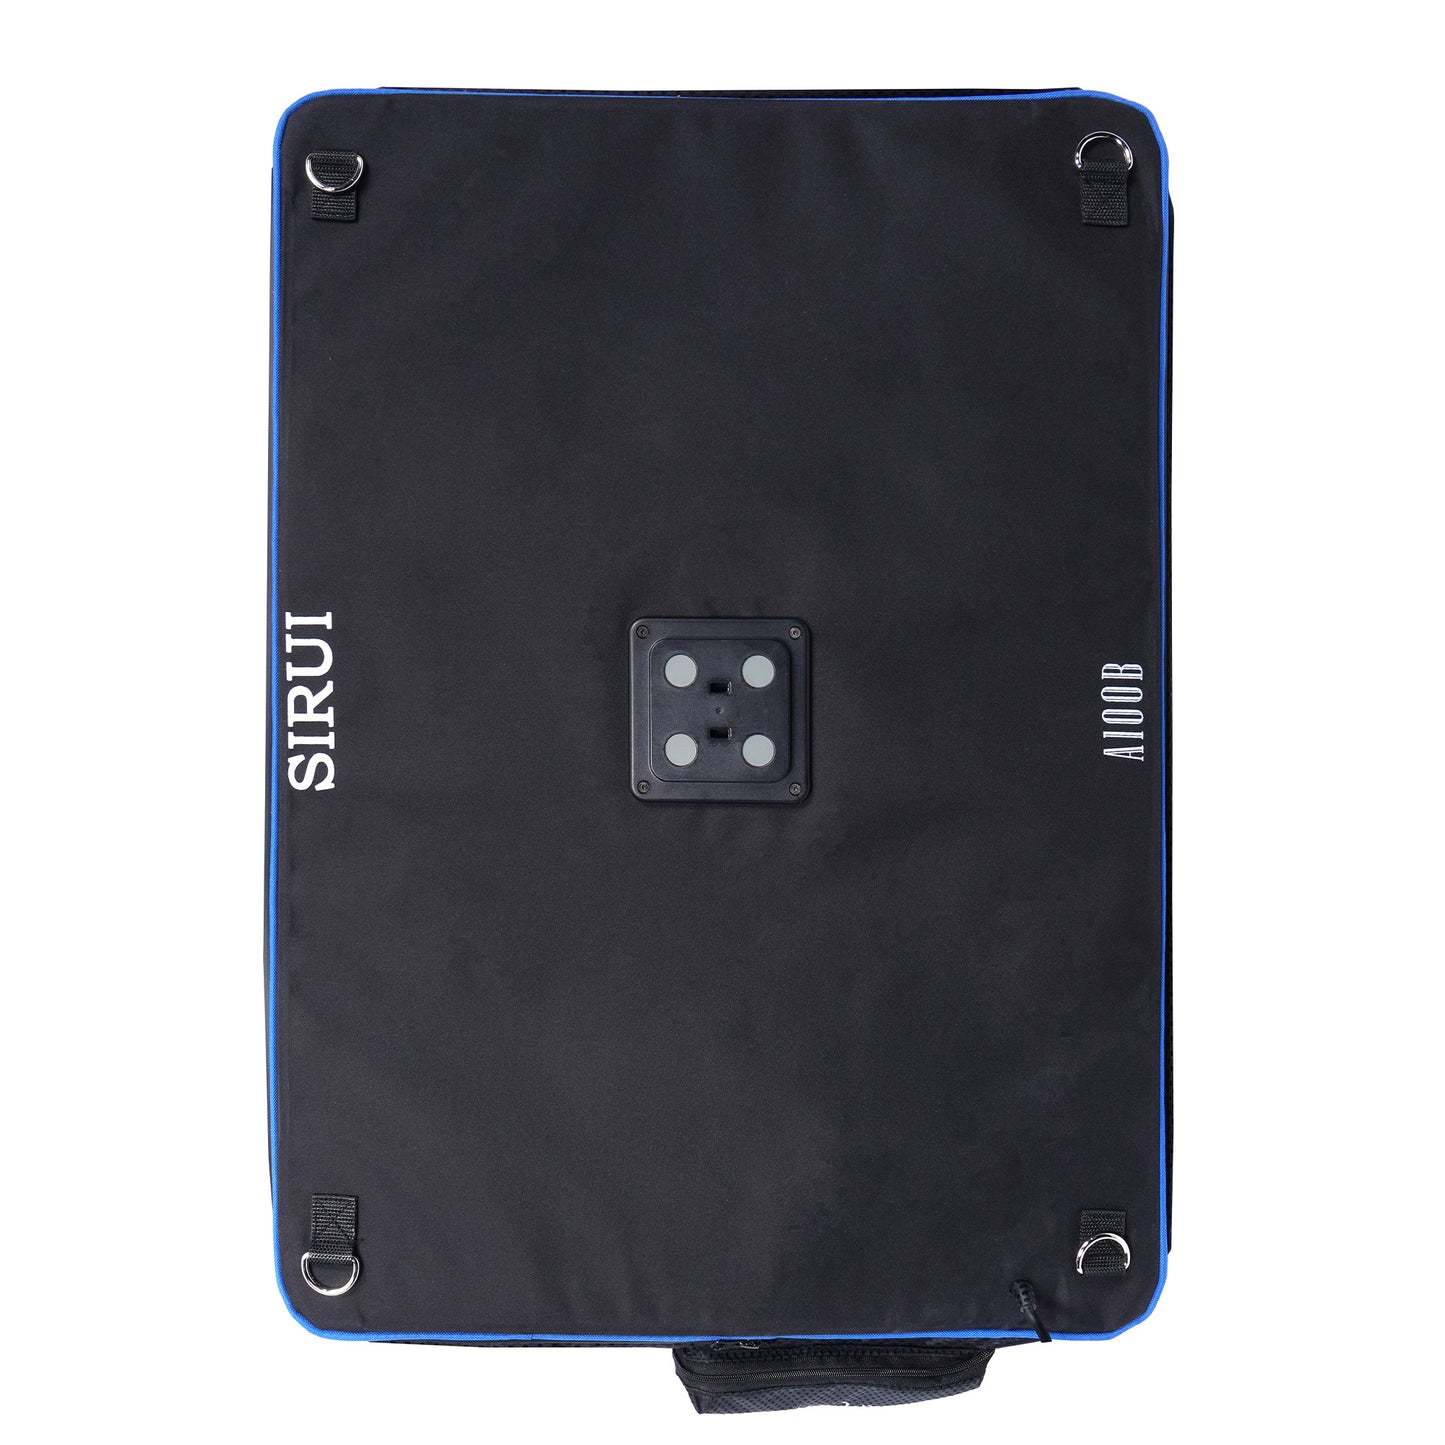 SIRUI A100B aufblasbare Bi-Color Softbox 68,5 x 50 cm mit Gitter